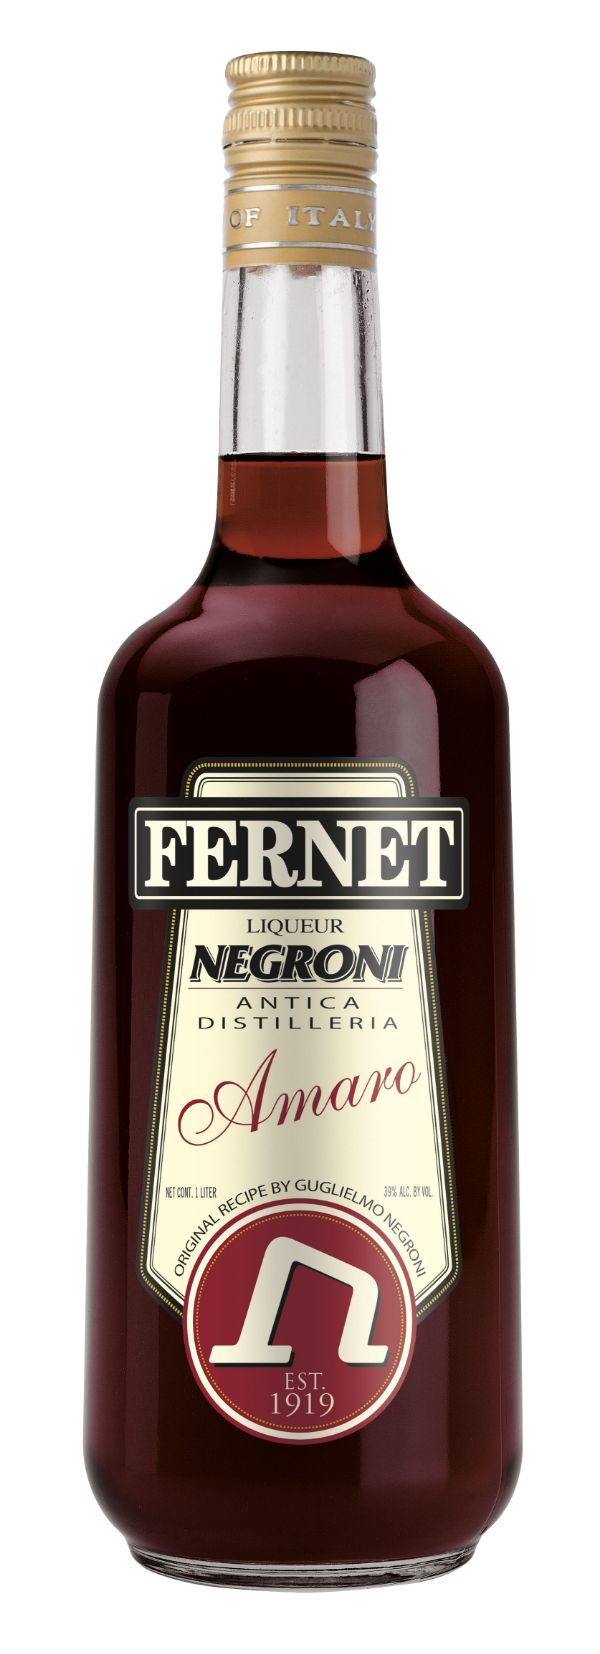 Buy Negroni Distillery Fernet Online -Craft City